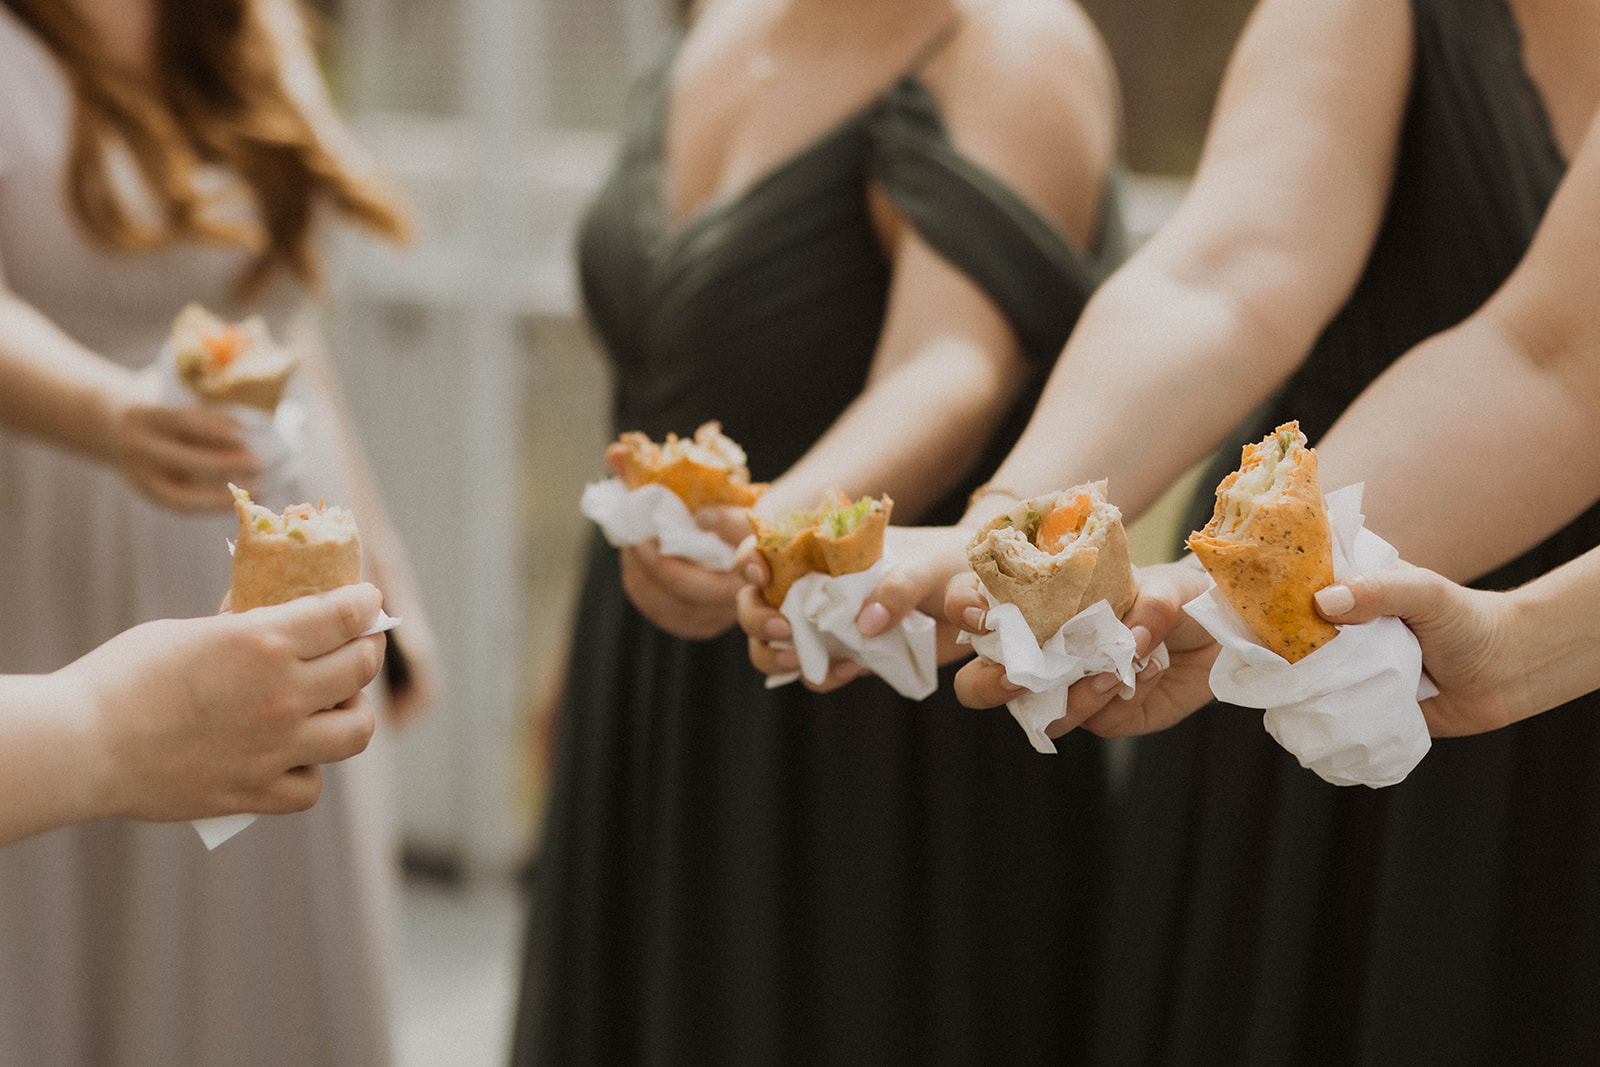 Bridesmaids snacks after an upstate New York wedding